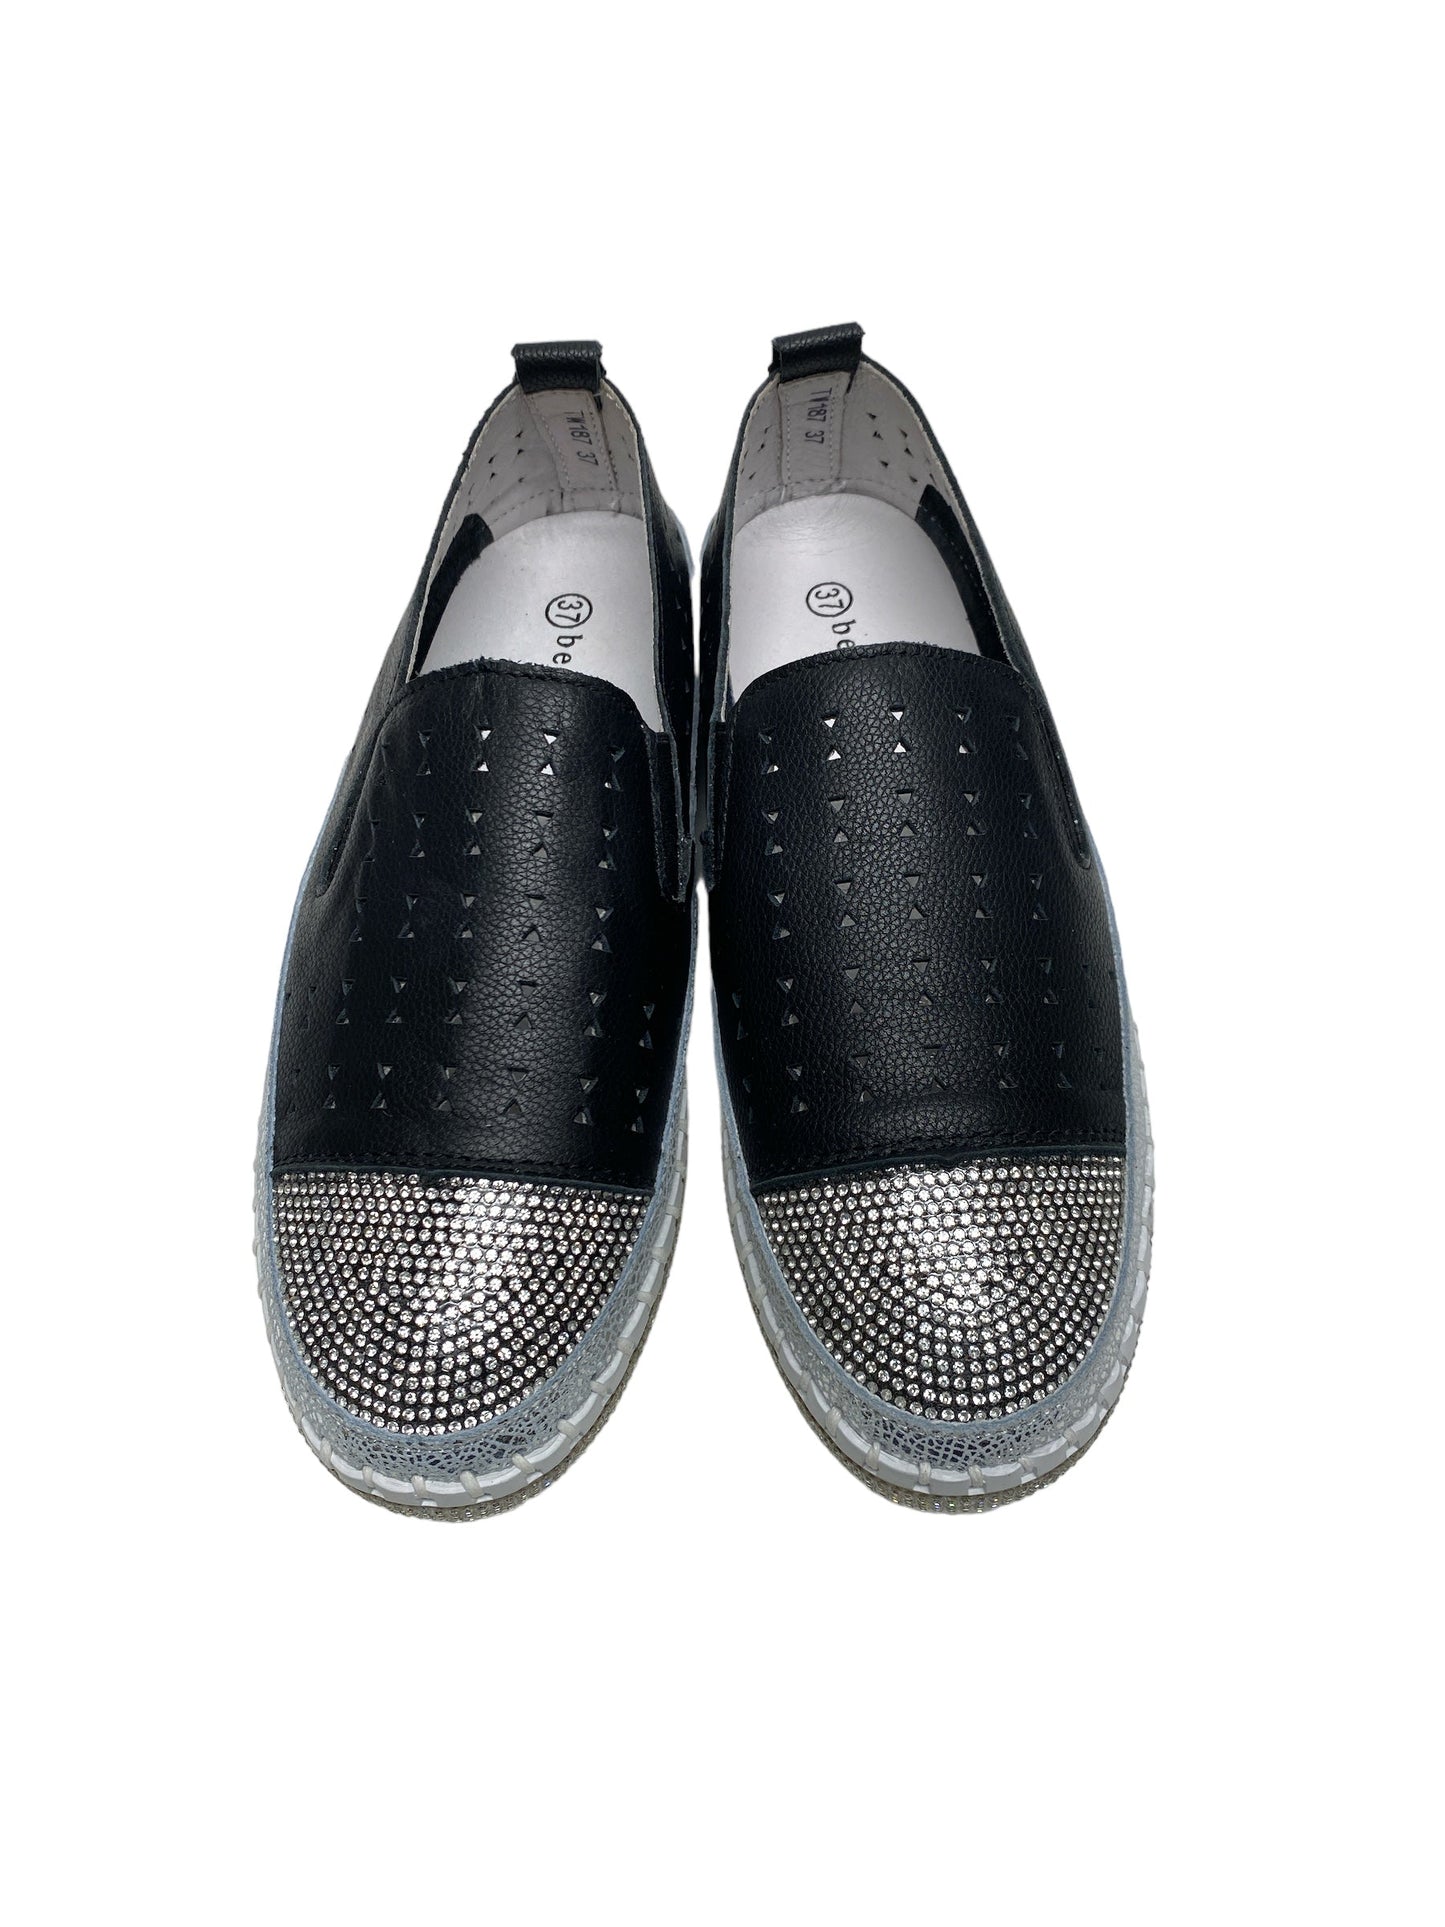 Black Shoes Sneakers Bernie Mev, Size 6.5